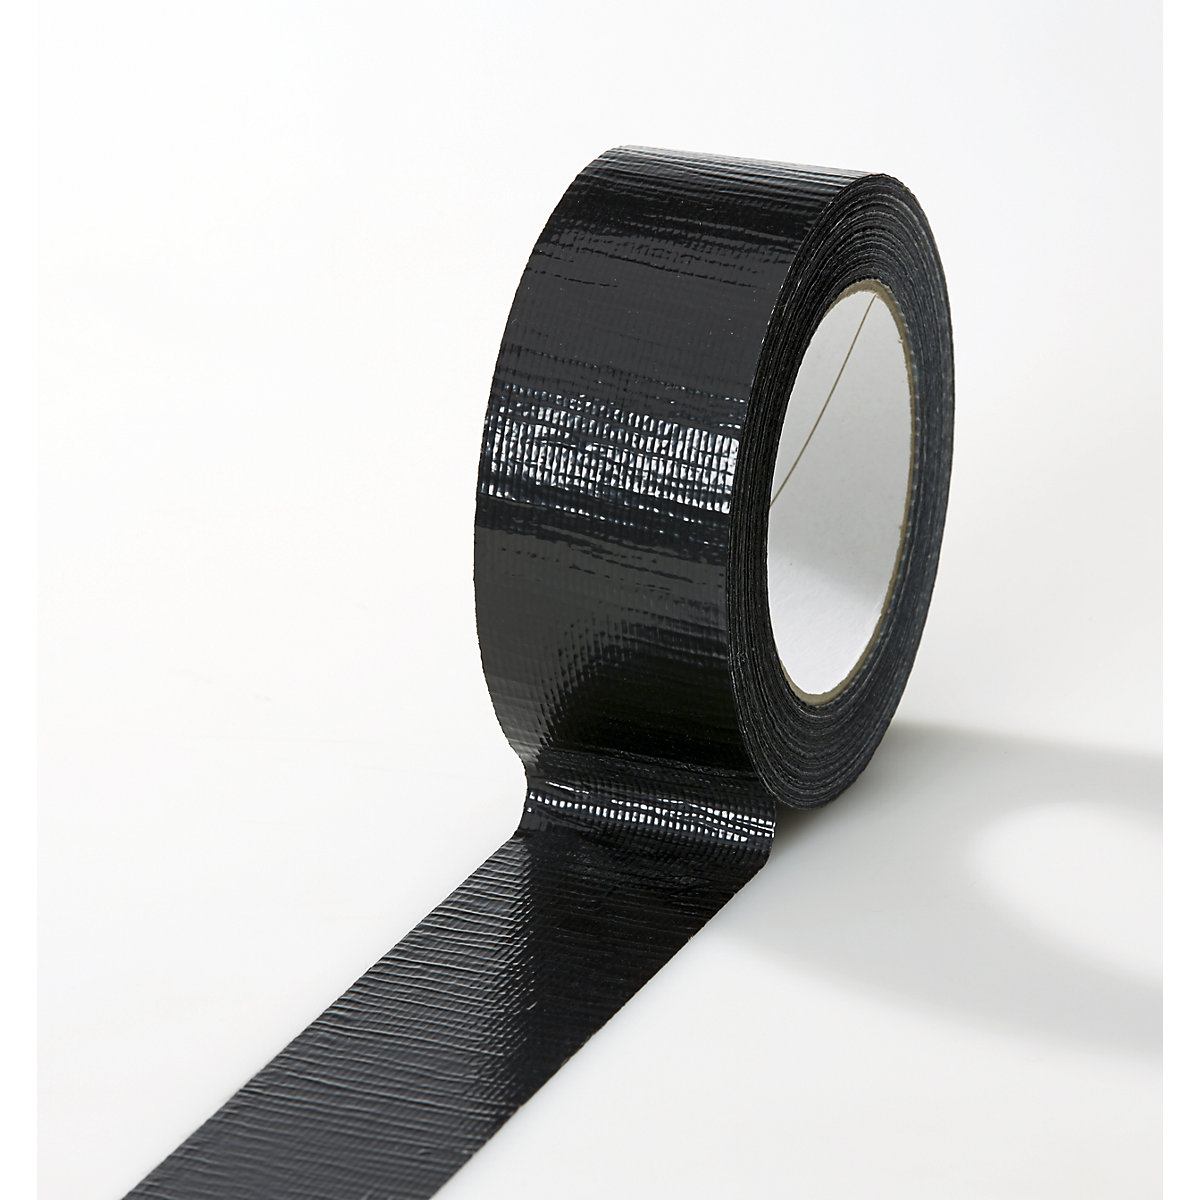 Tkaninová páska, v různých barvách, bal.j. 24 rolí, černá, šířka pásky 38 mm-16